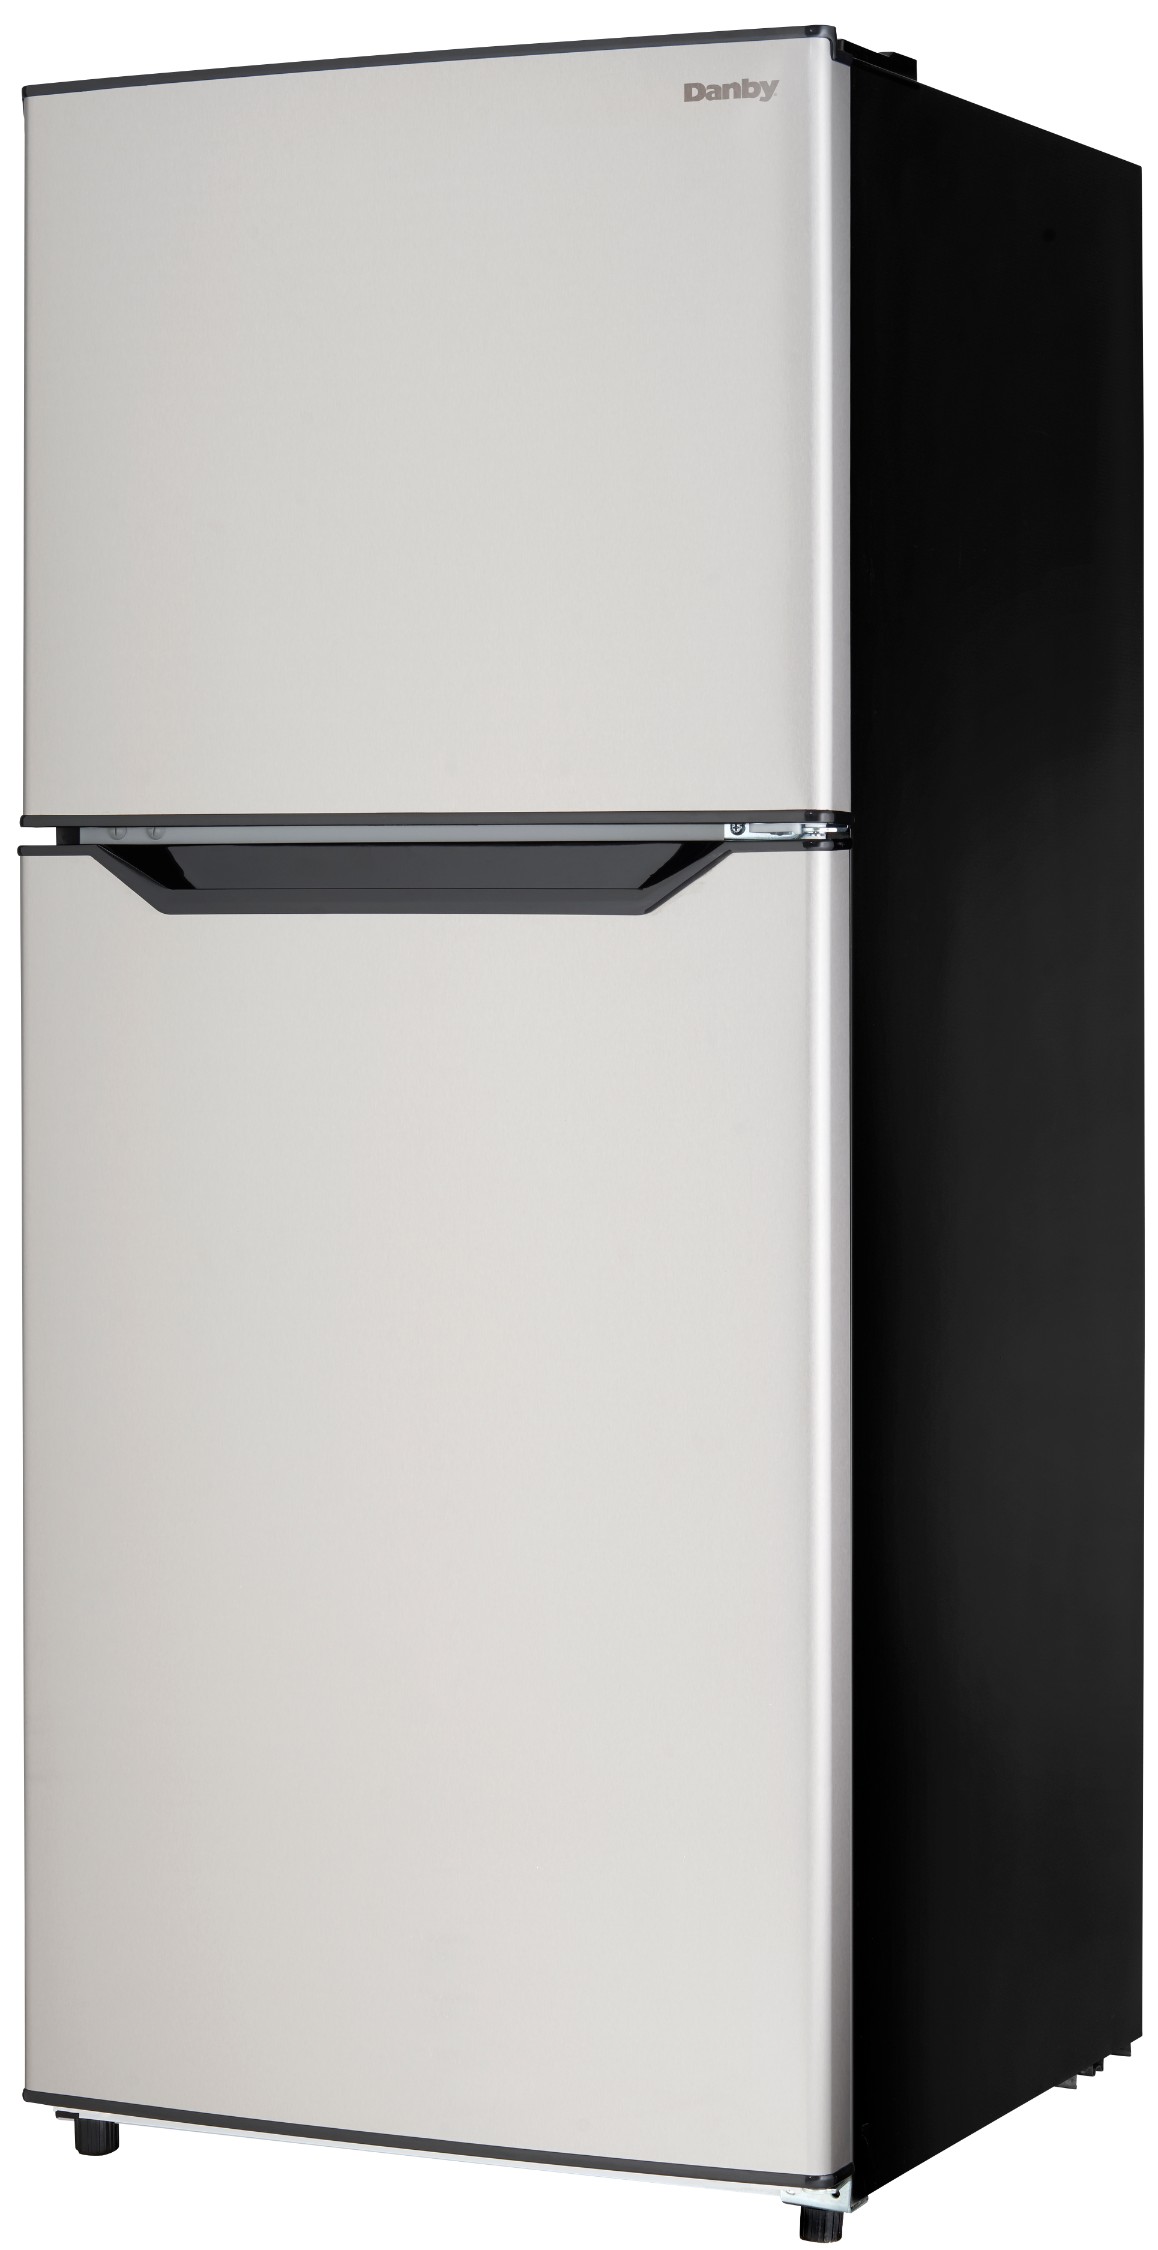 Danby 10.1 cu. ft. Apartment Size Refrigerator